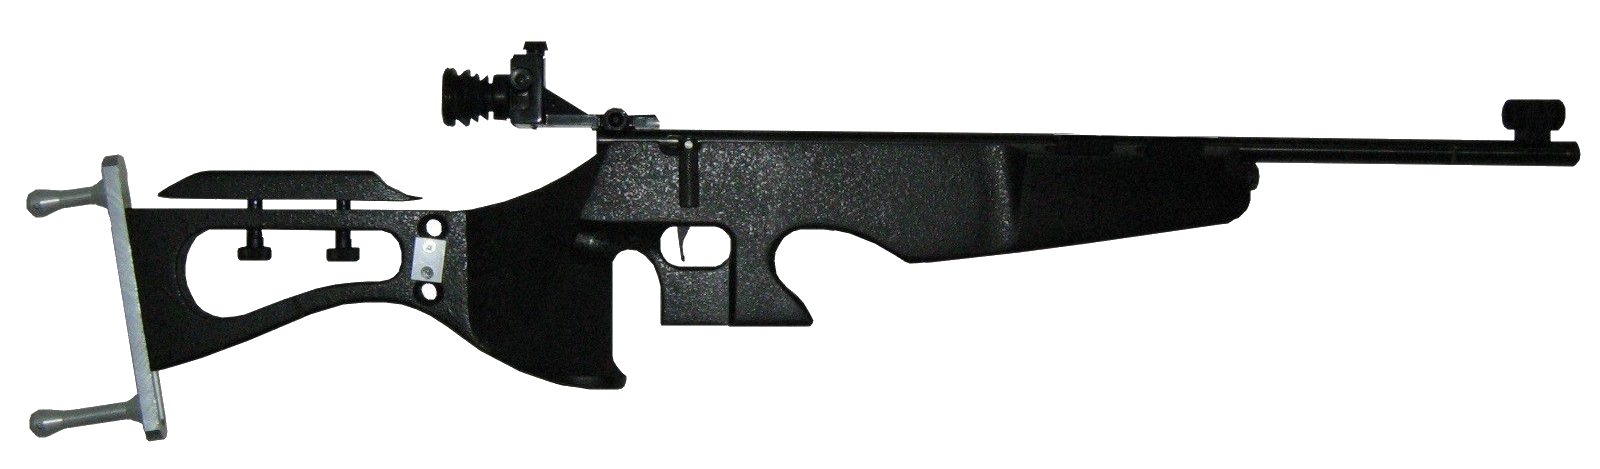 Laserová puška E-gun 223 - 